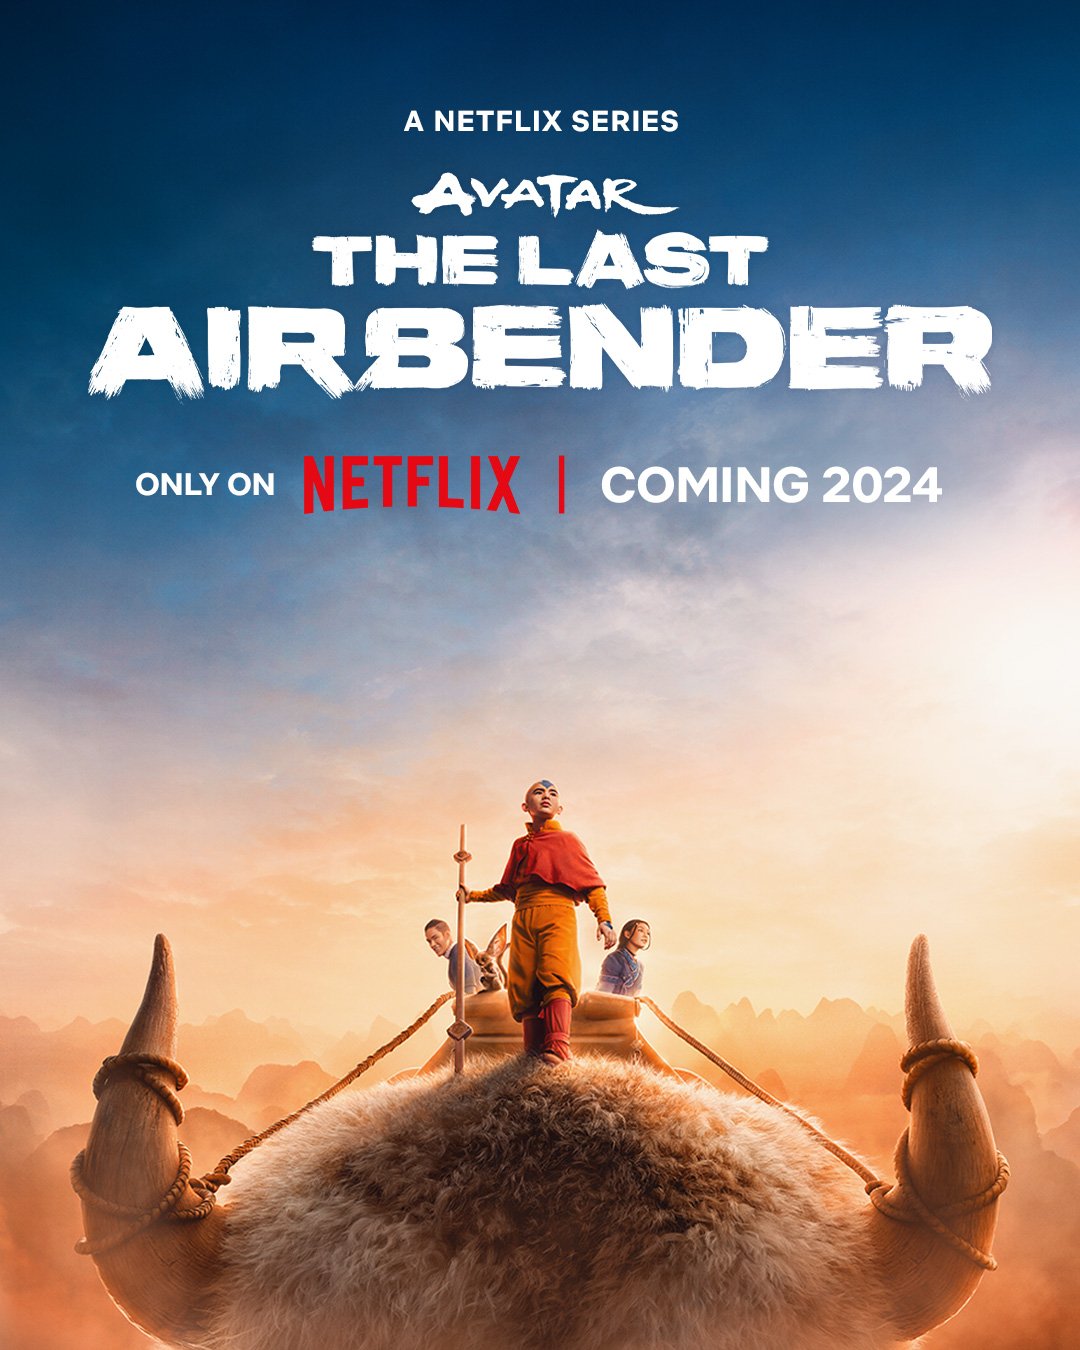 Avatar the Last Airbender Netflix live-action series poster revealing Aang, Sokka, and Katara